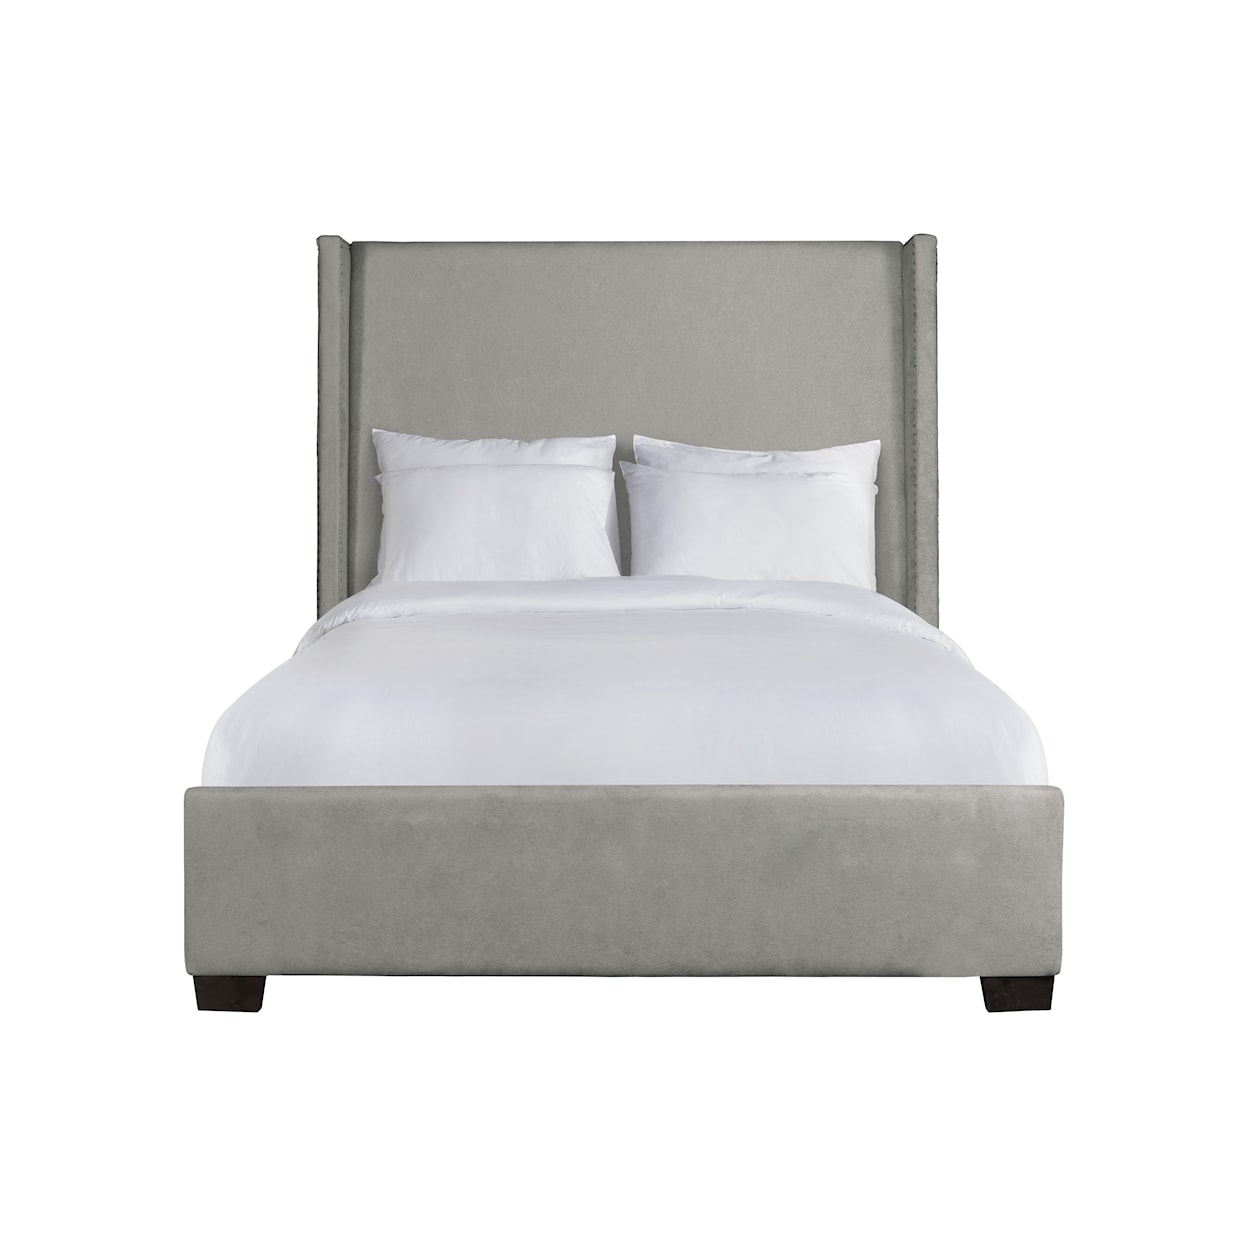 Elements International Magnolia Queen Upholstered Bed